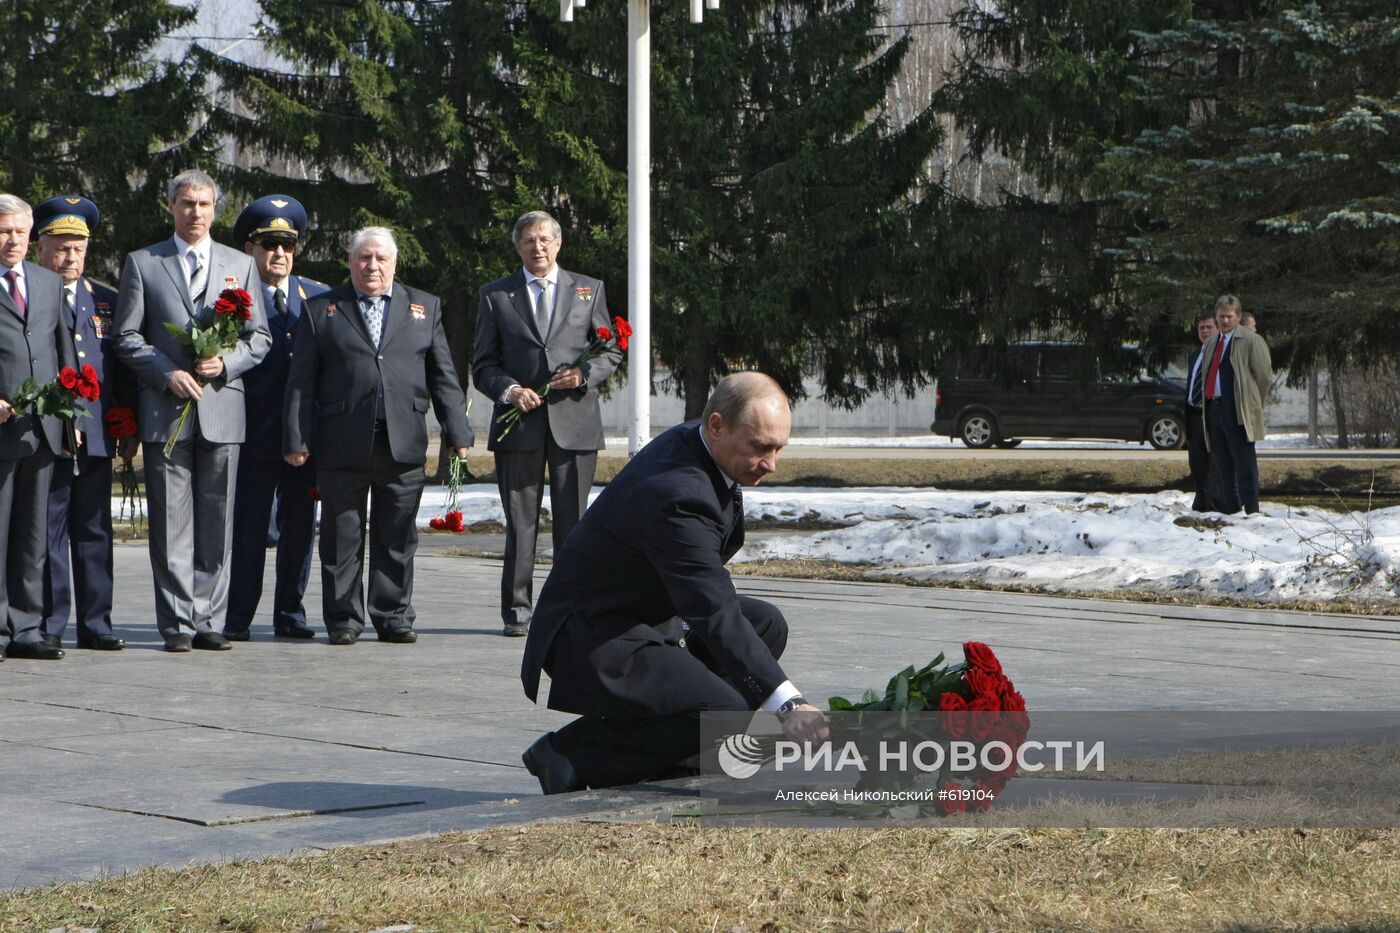 В.Путин посетил ФГБУ "НИИ ЦПК им. Ю. А. Гагарина"